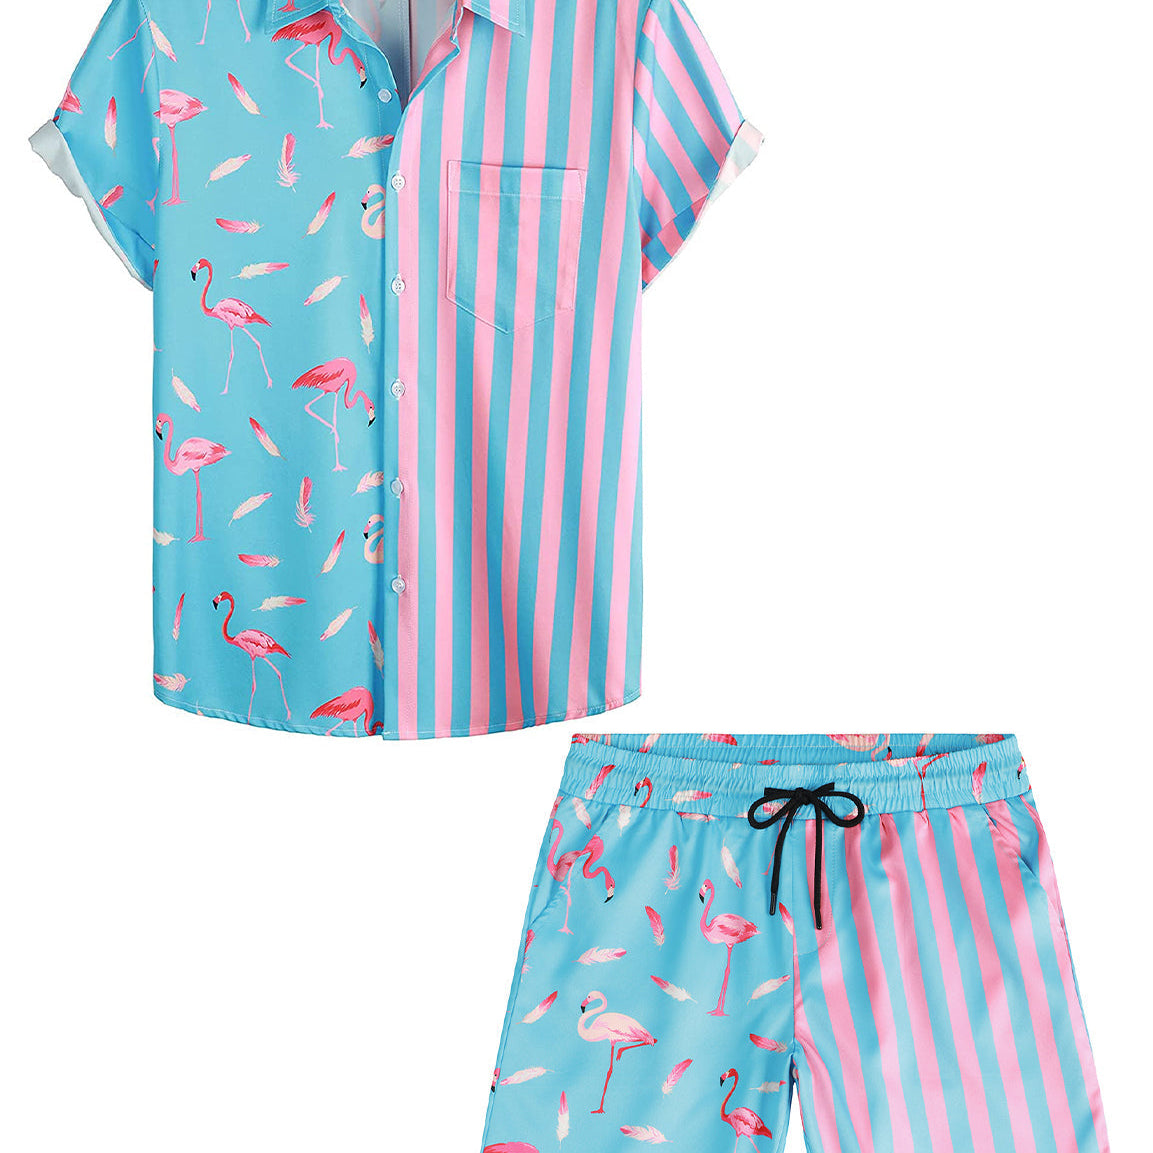 Men's Pink Flamingo Striped Print Holiday Suit Short Sleeve Pocket Matching Shirt and Shorts Set